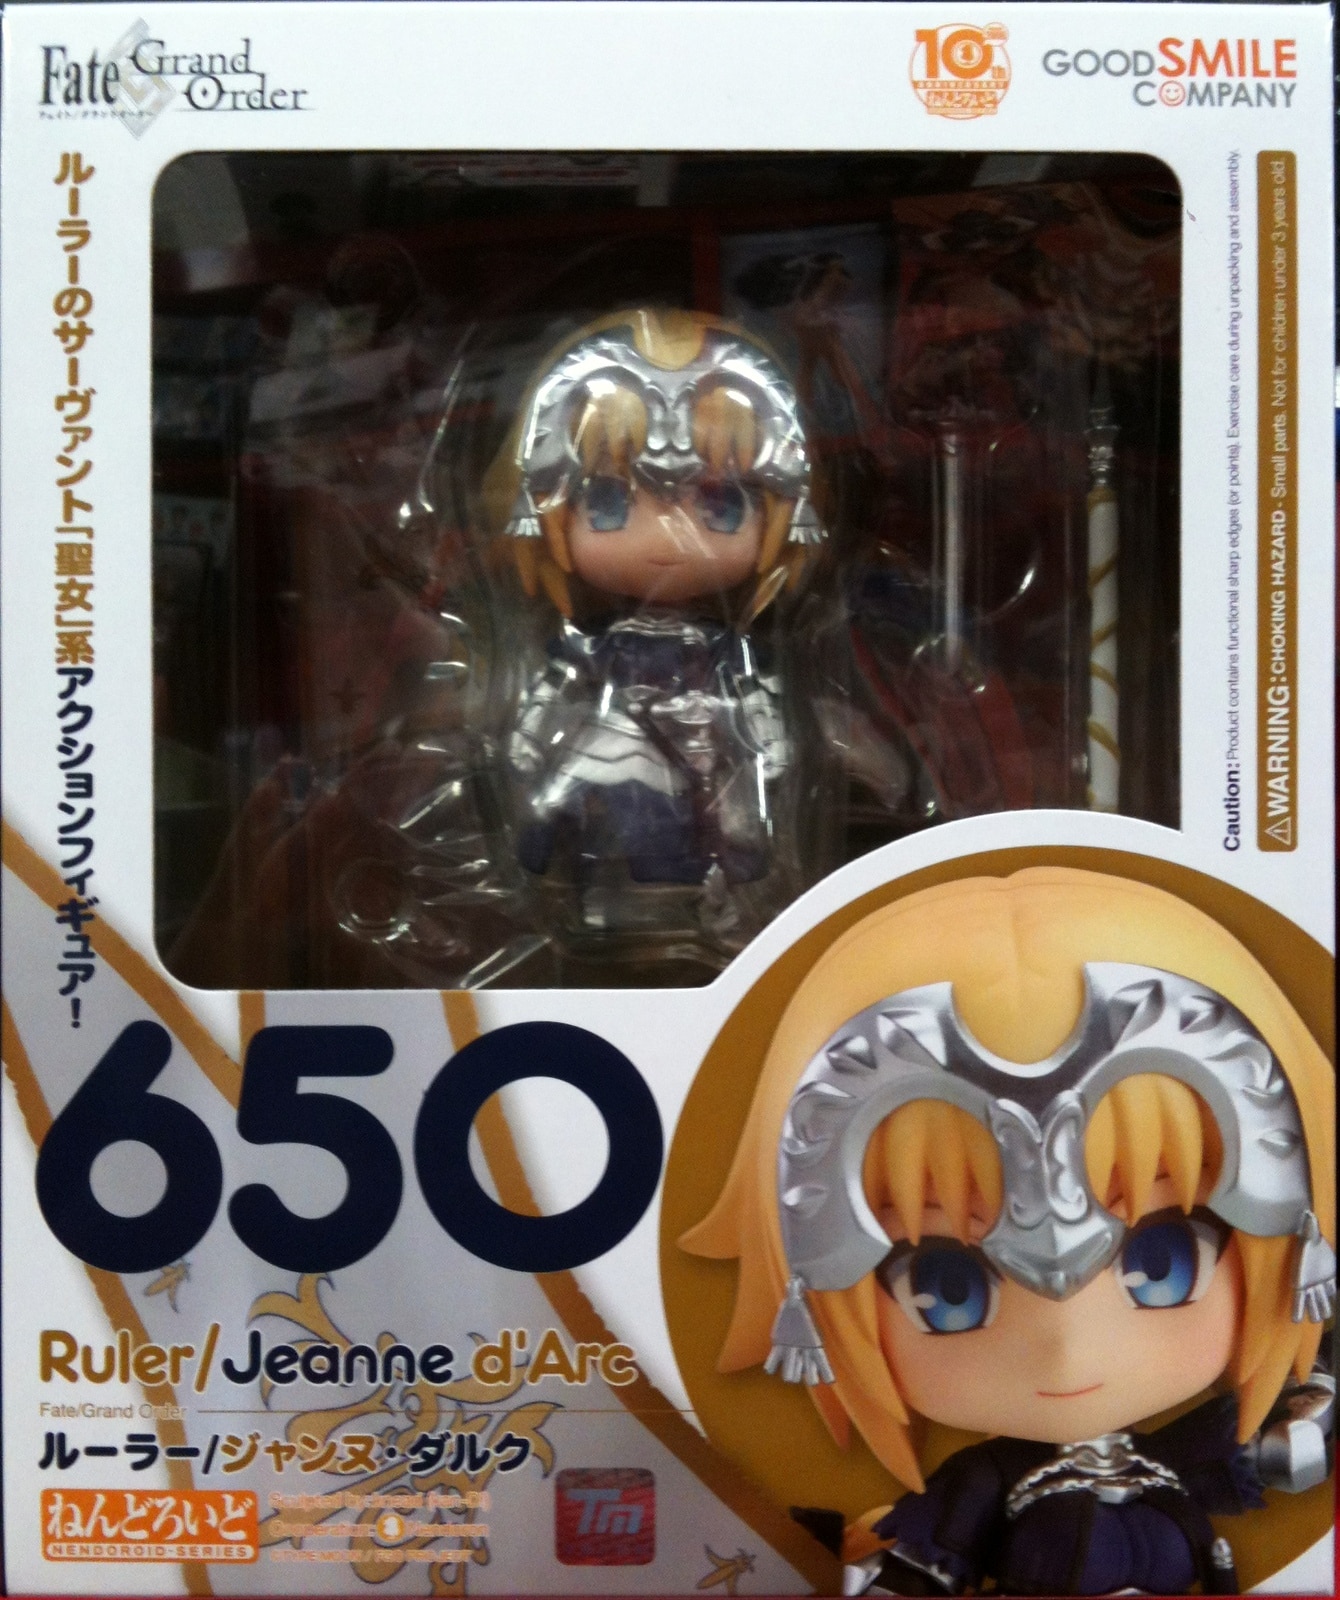 Ruler/Jeanne D'Arc Nendoroid Action Figure Good Smile Fate/Grand Order 